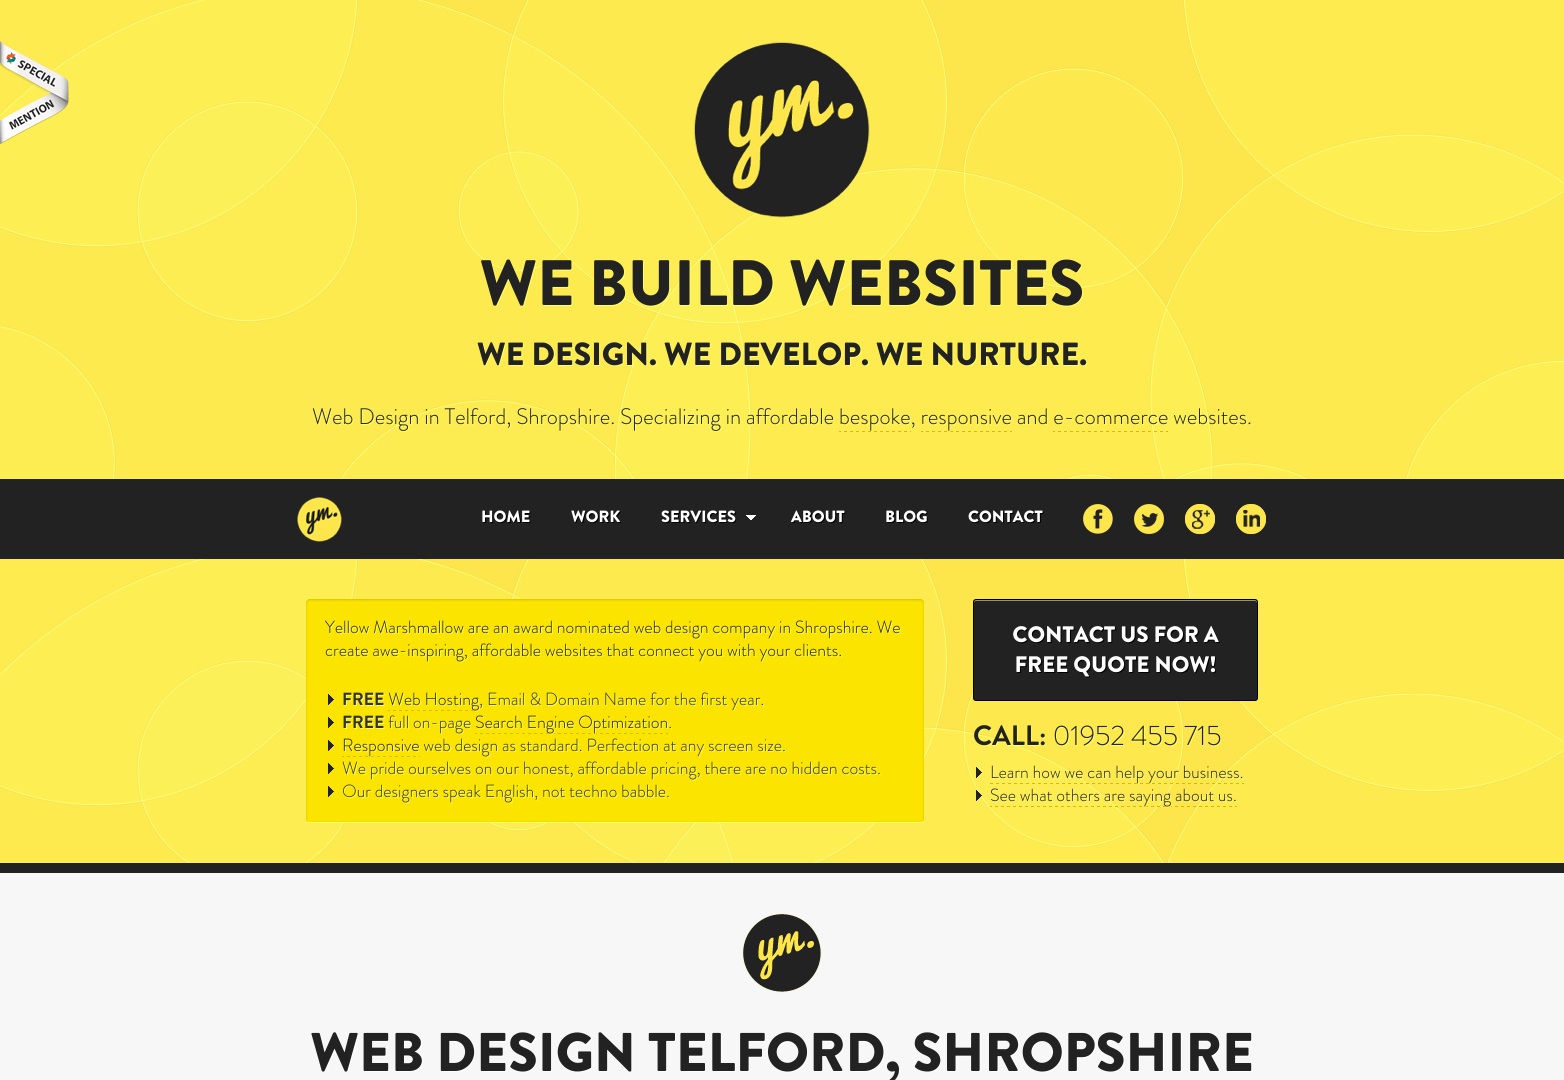 Web Design Telford | Web Design Shropshire | Yellow Marshmallow